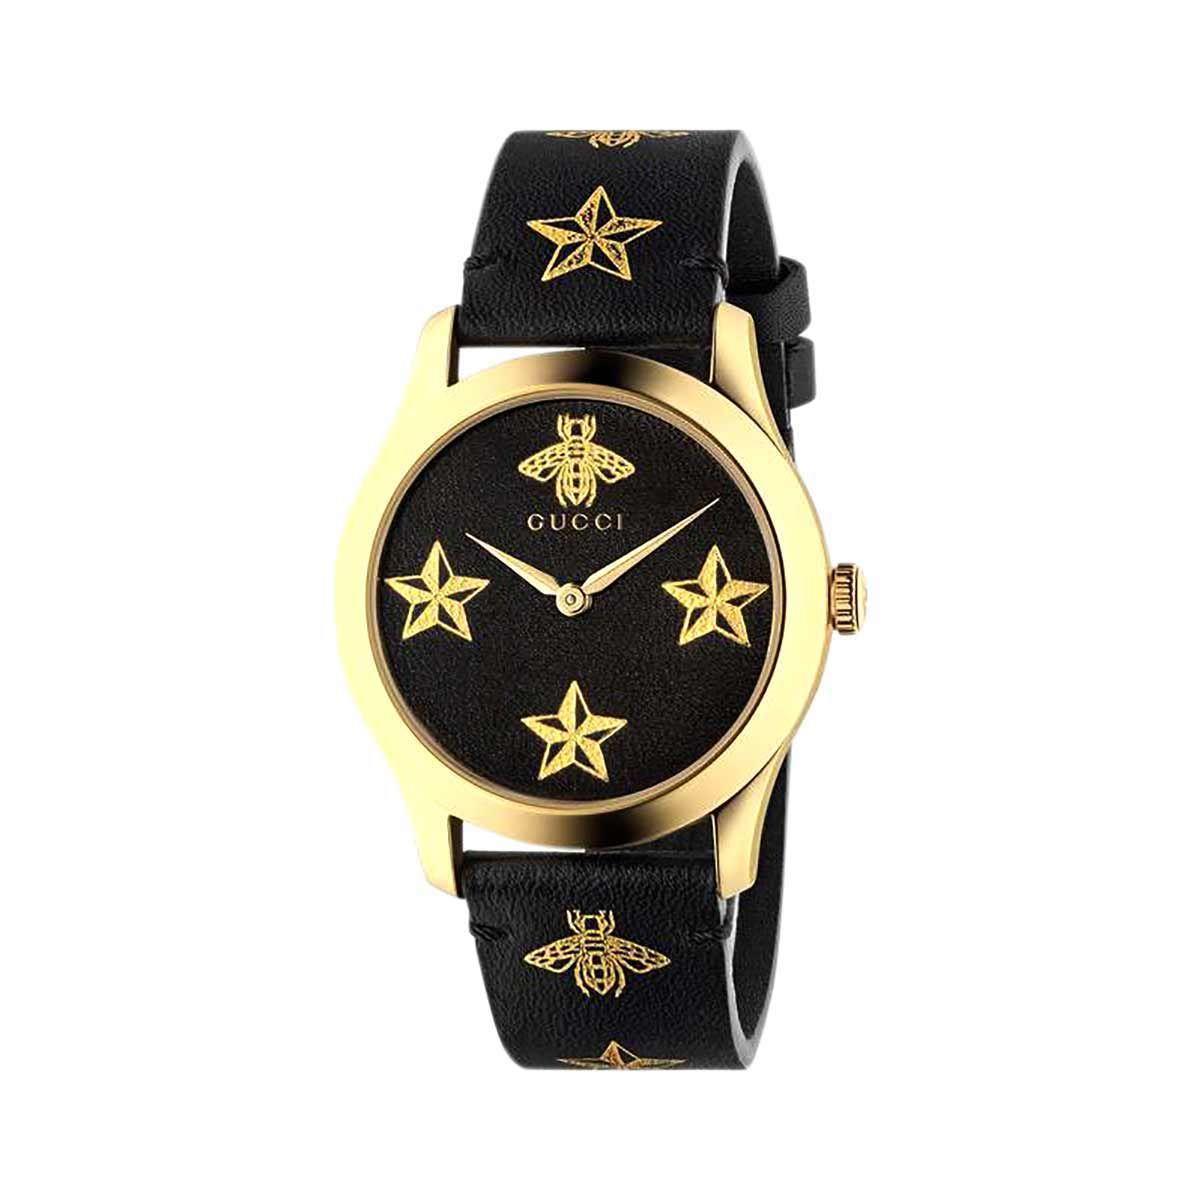 Gucci Women's Watches - Watch Home™